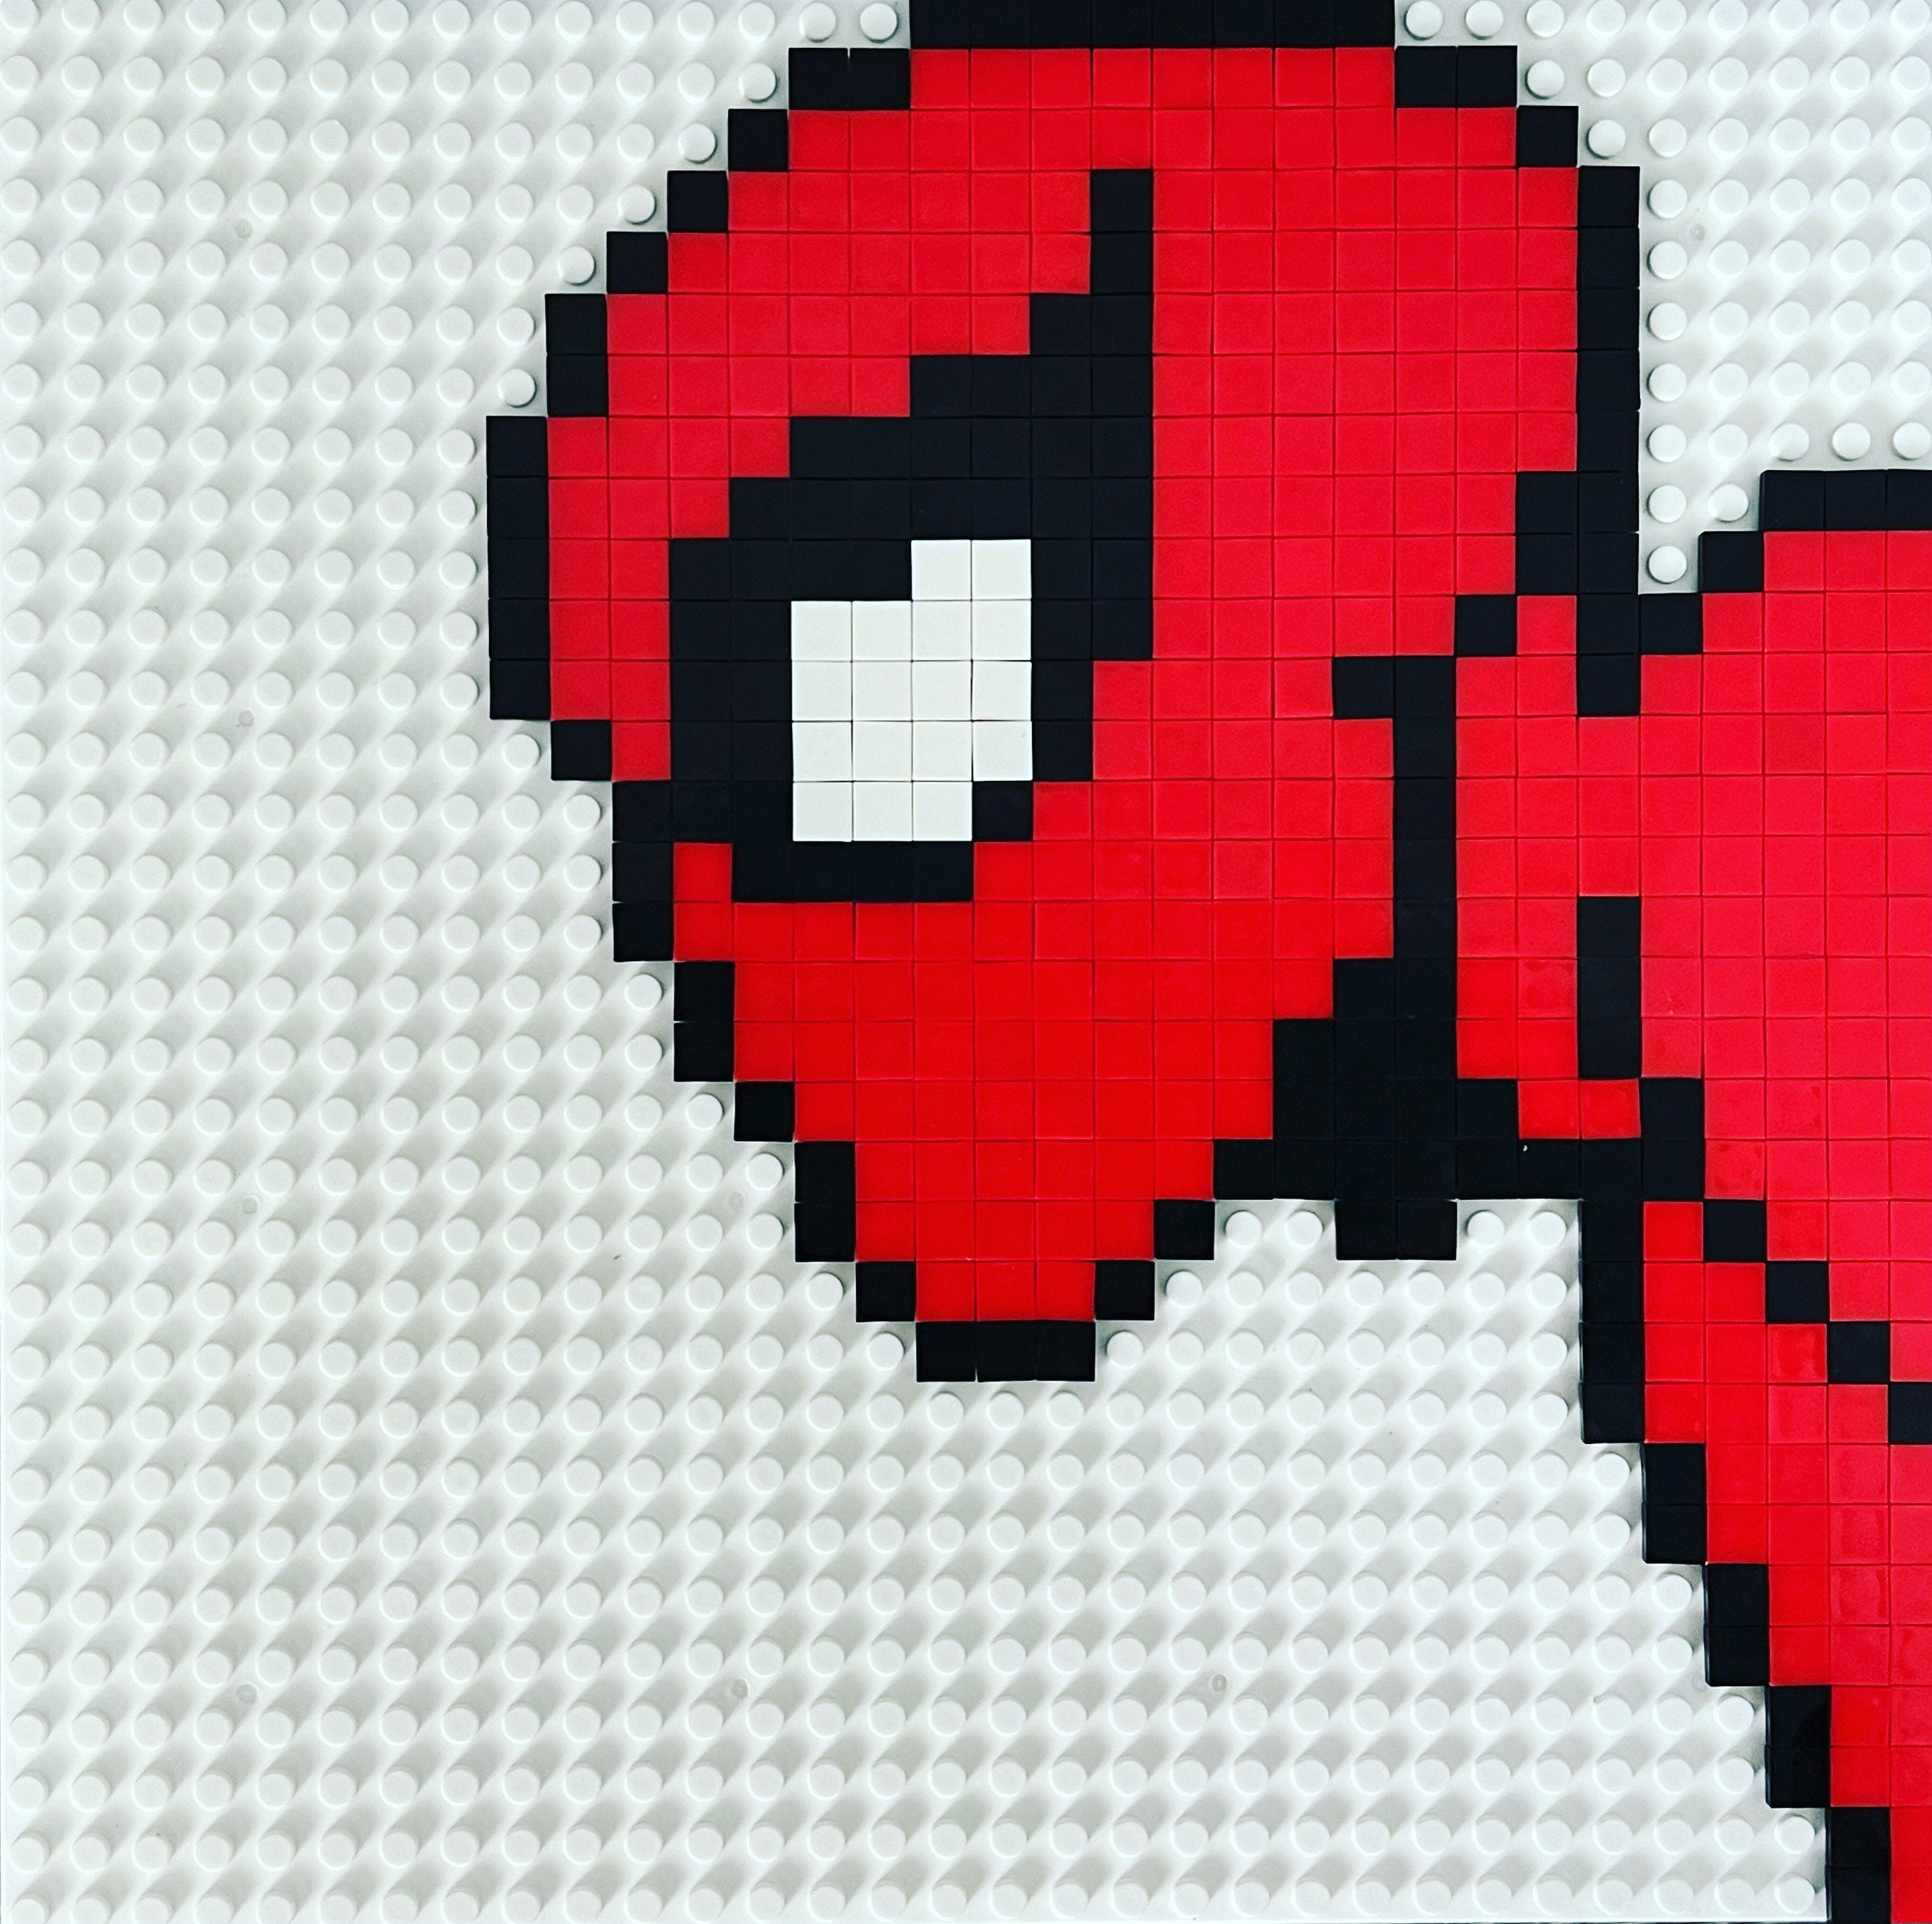 Spider Man and Venom Pixel Art by IrishPerlerPixels